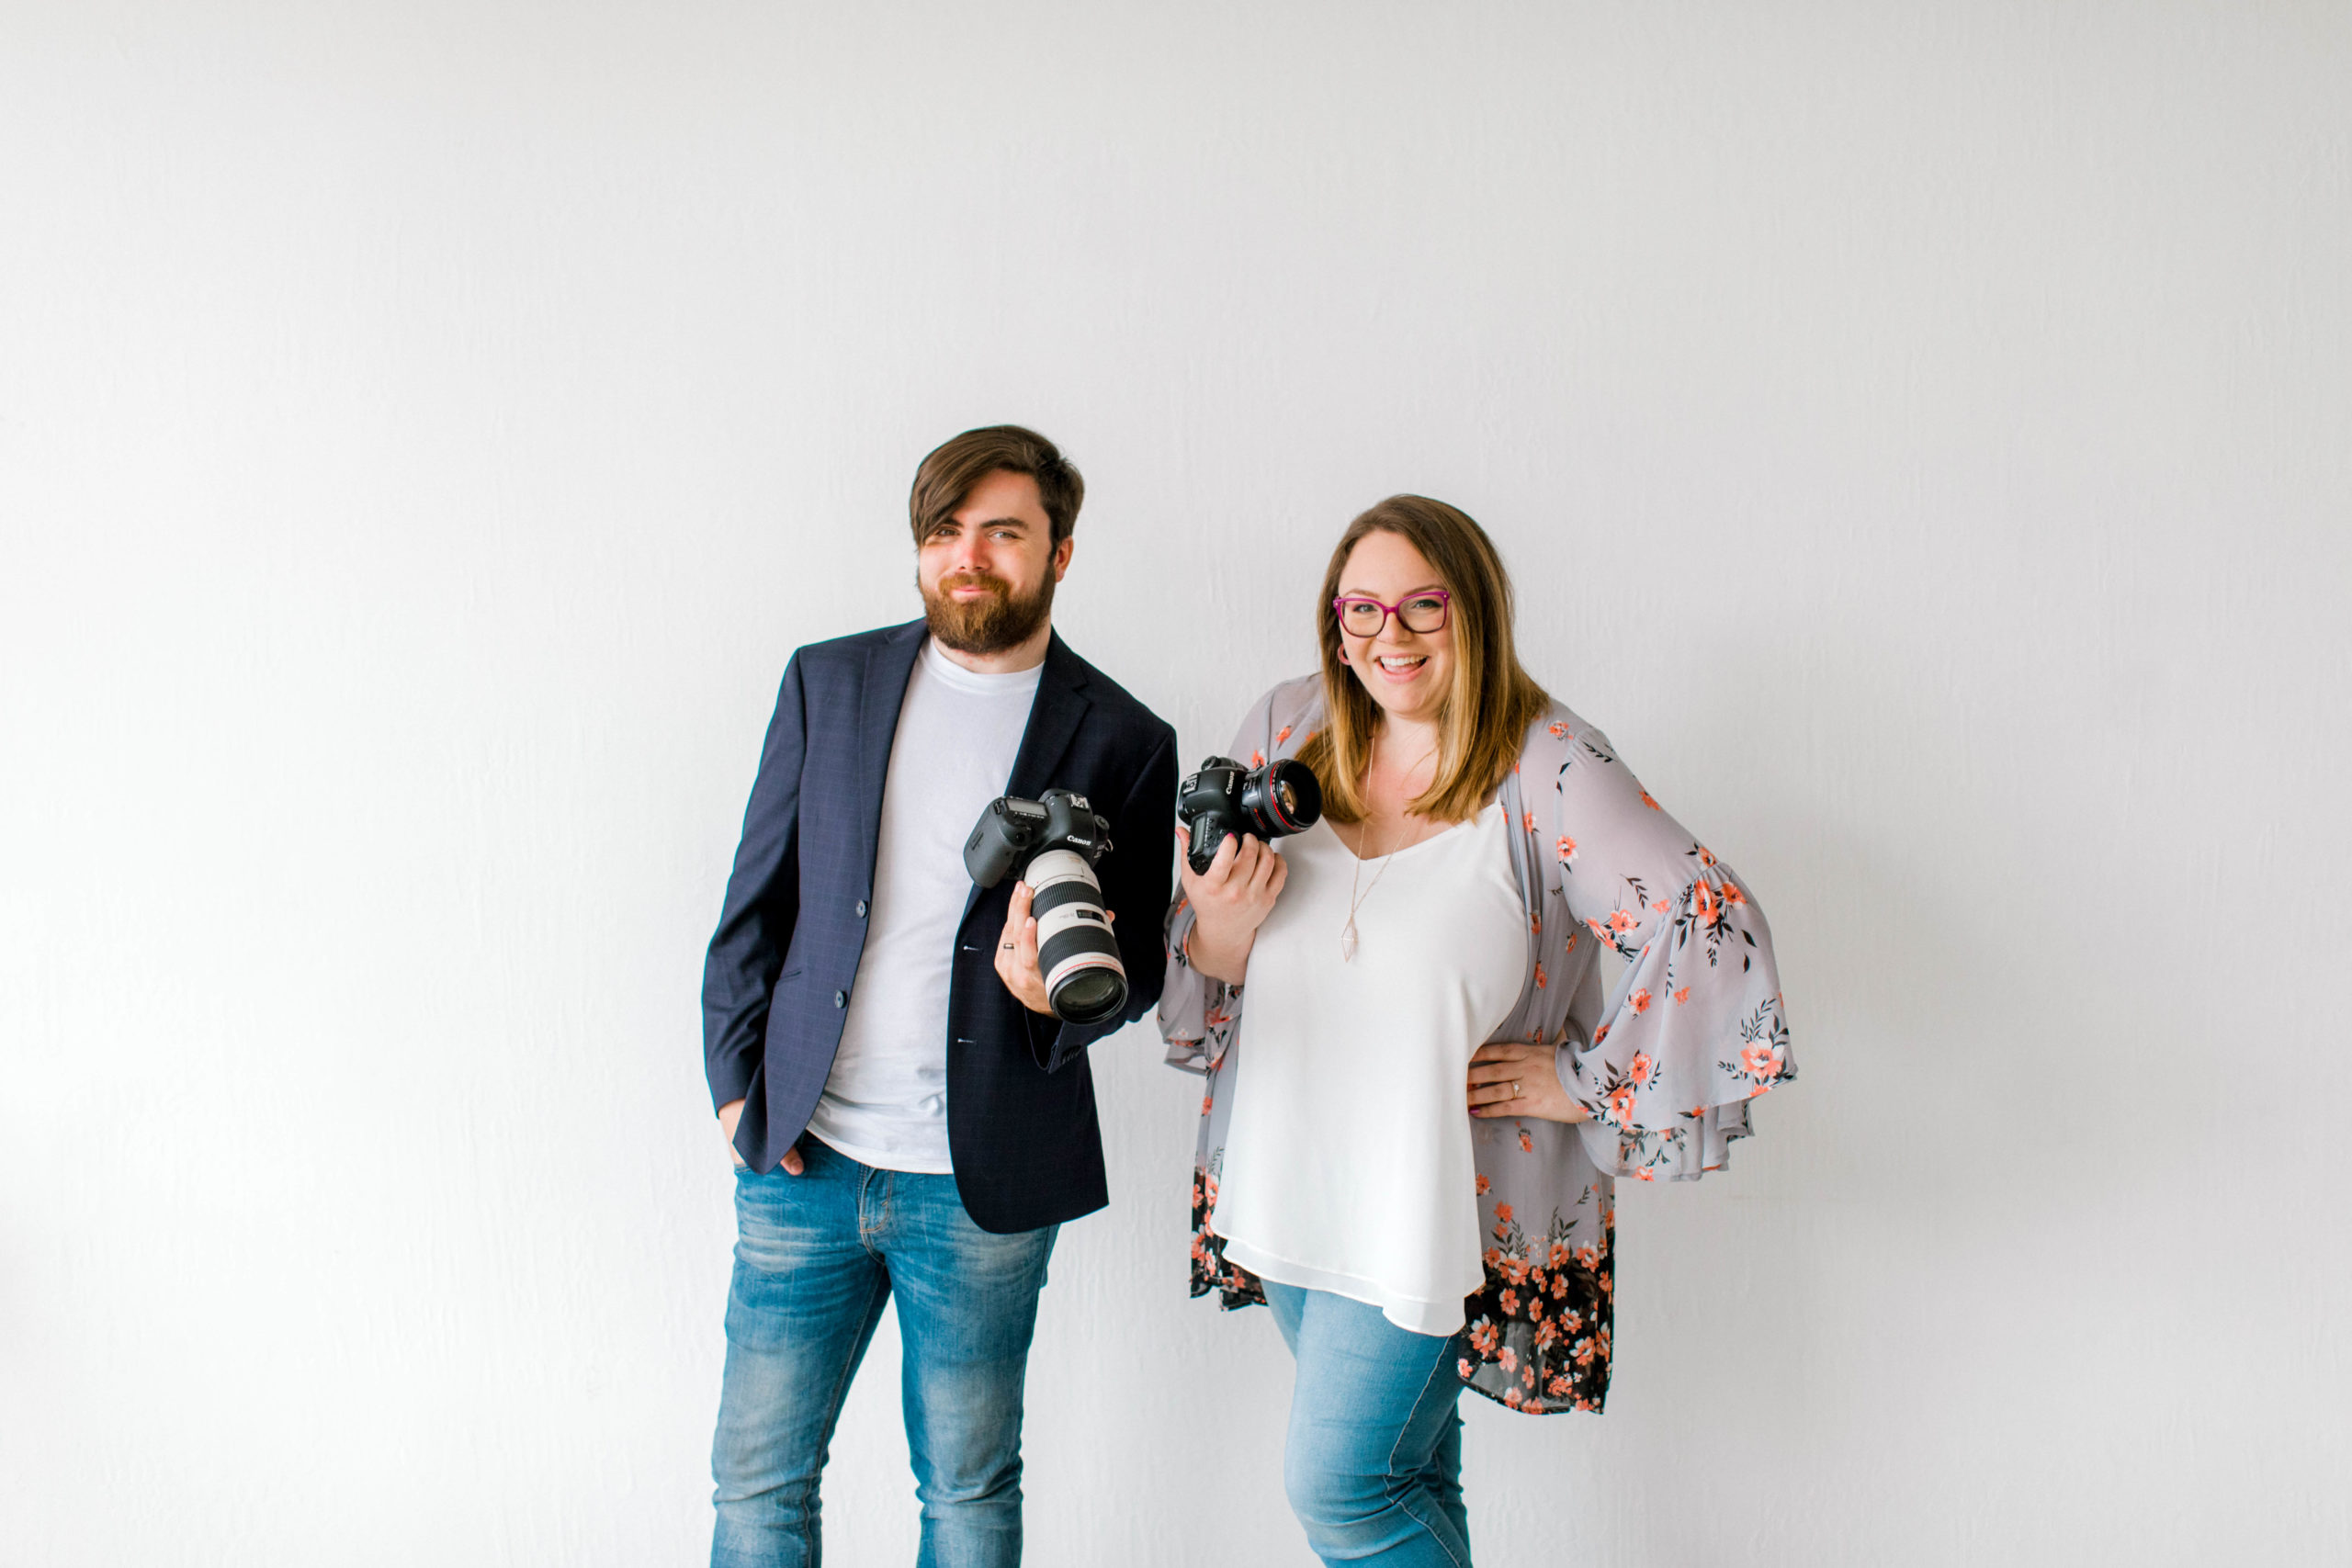 California Wedding Photographers Smiling Holding Cameras